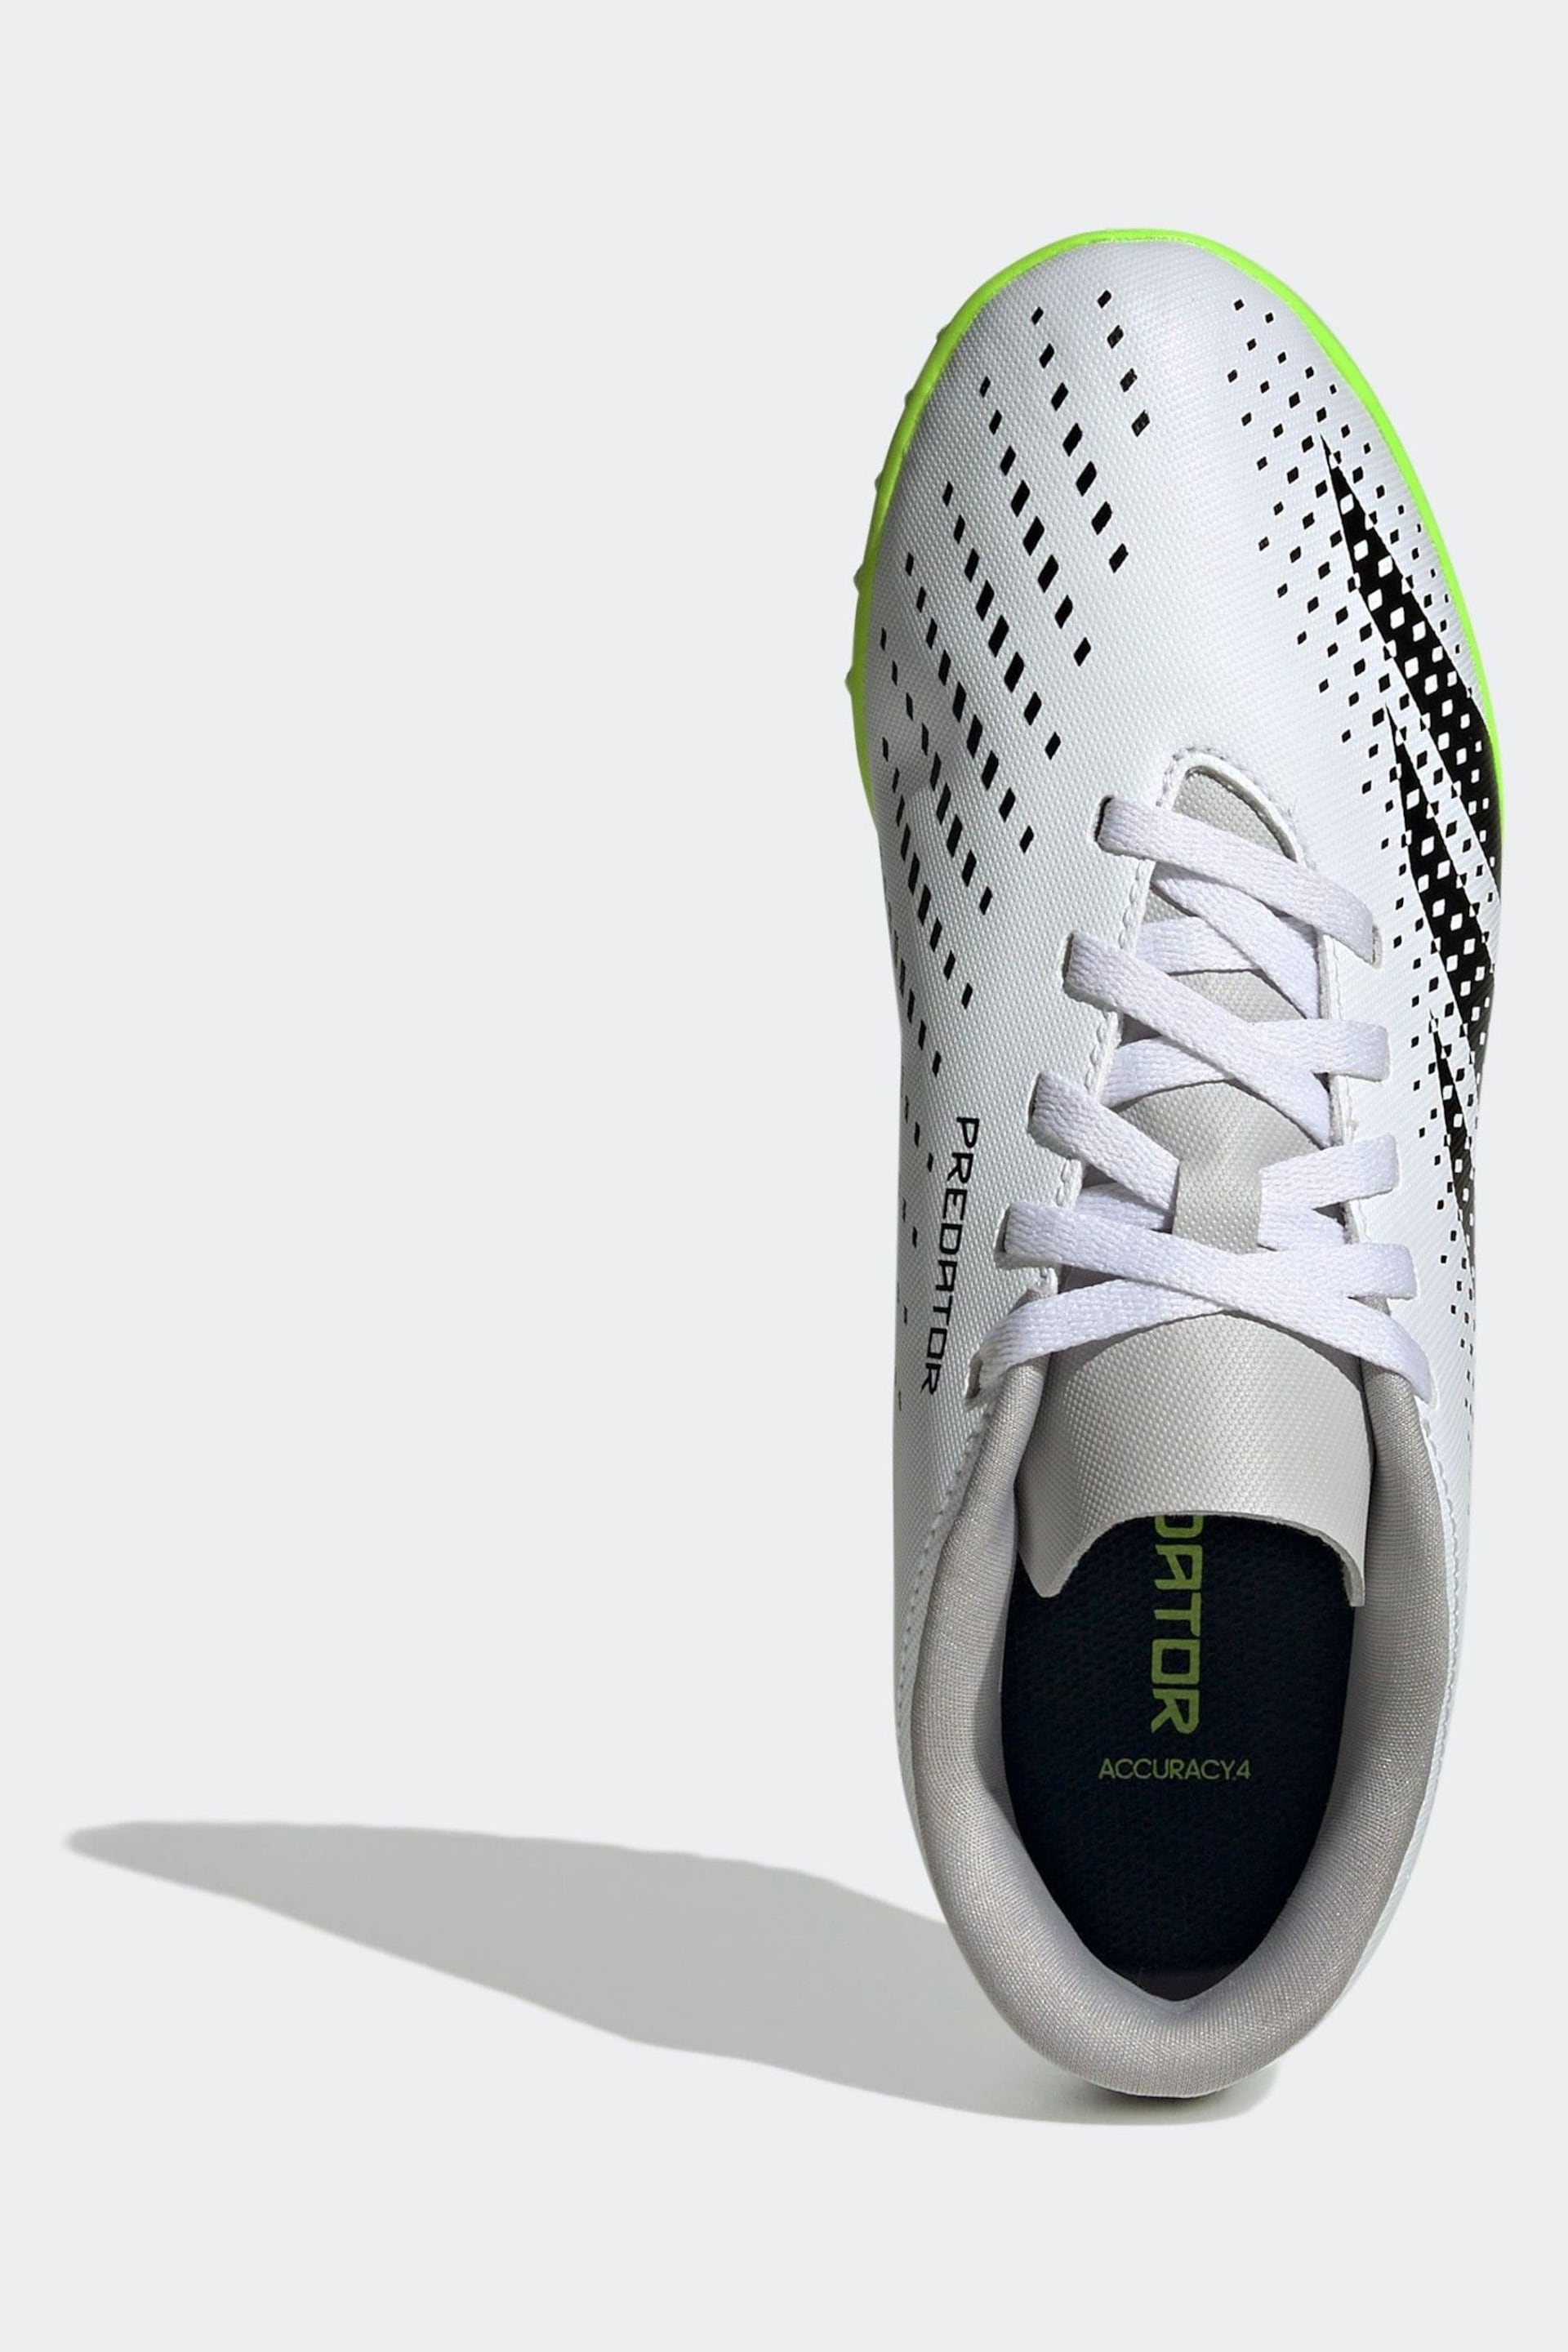 adidas White/Black Football Sport Kids Predator Accuracy.4 Turf Boots - Image 6 of 9